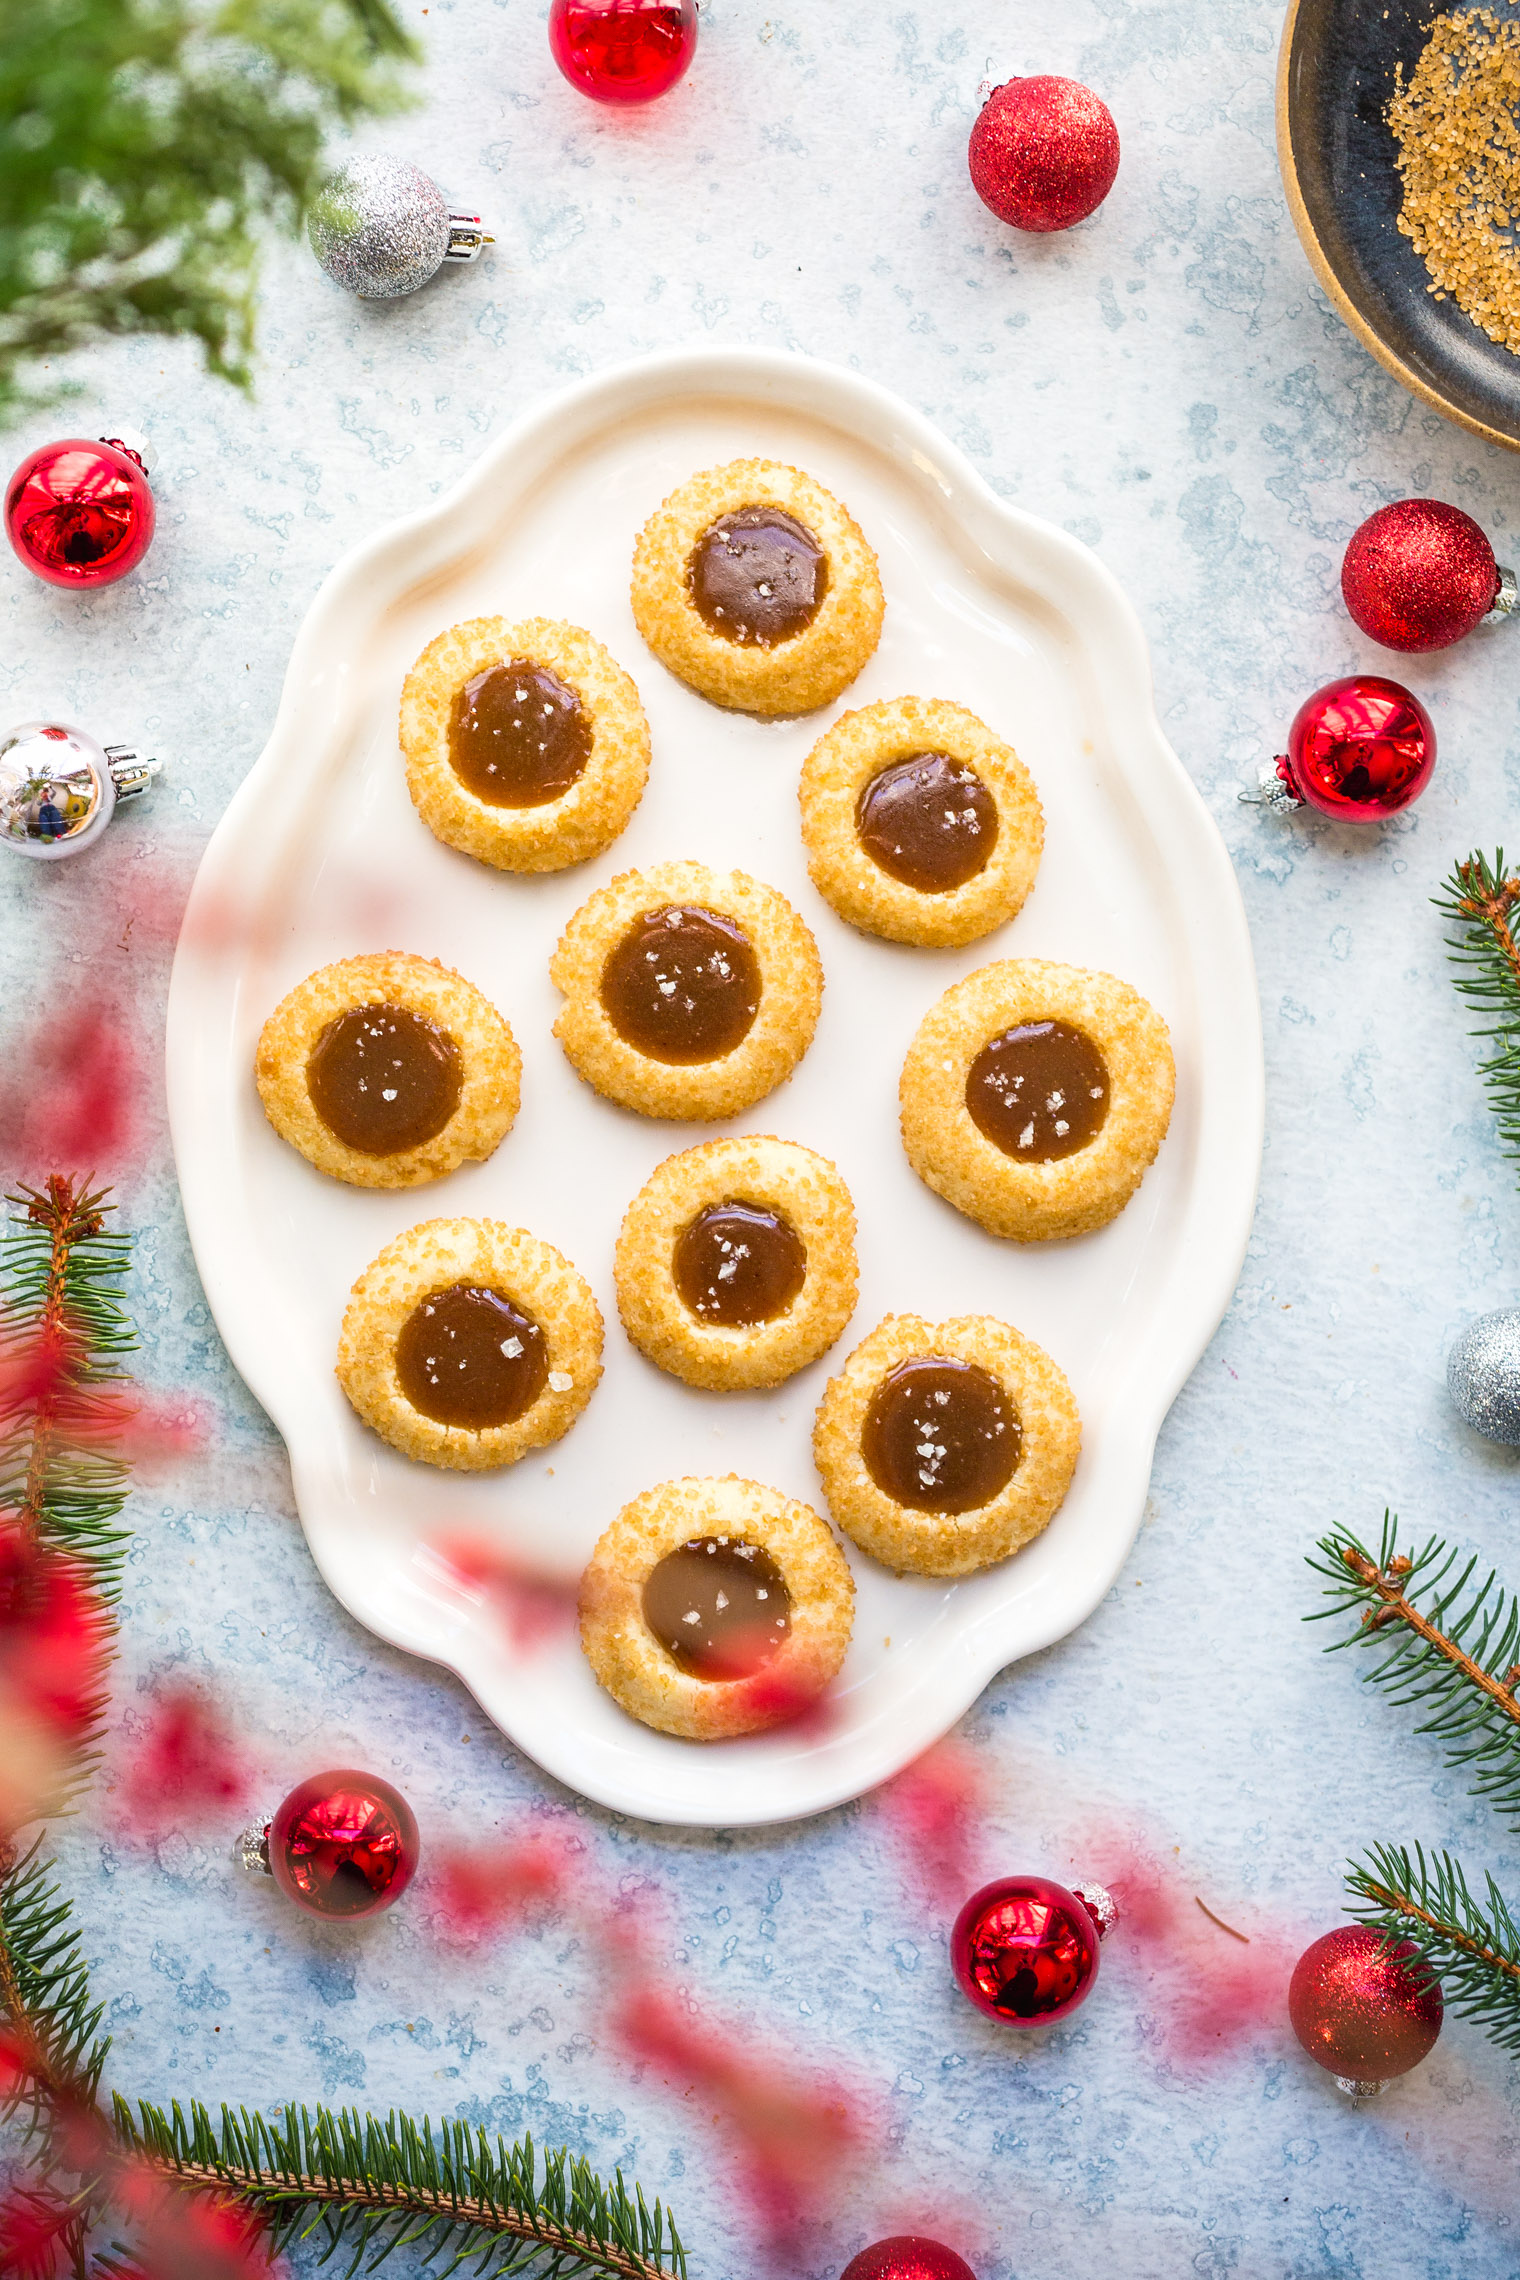 Shortbread Thumbprint Cookies with Cardamom Orange Caramel